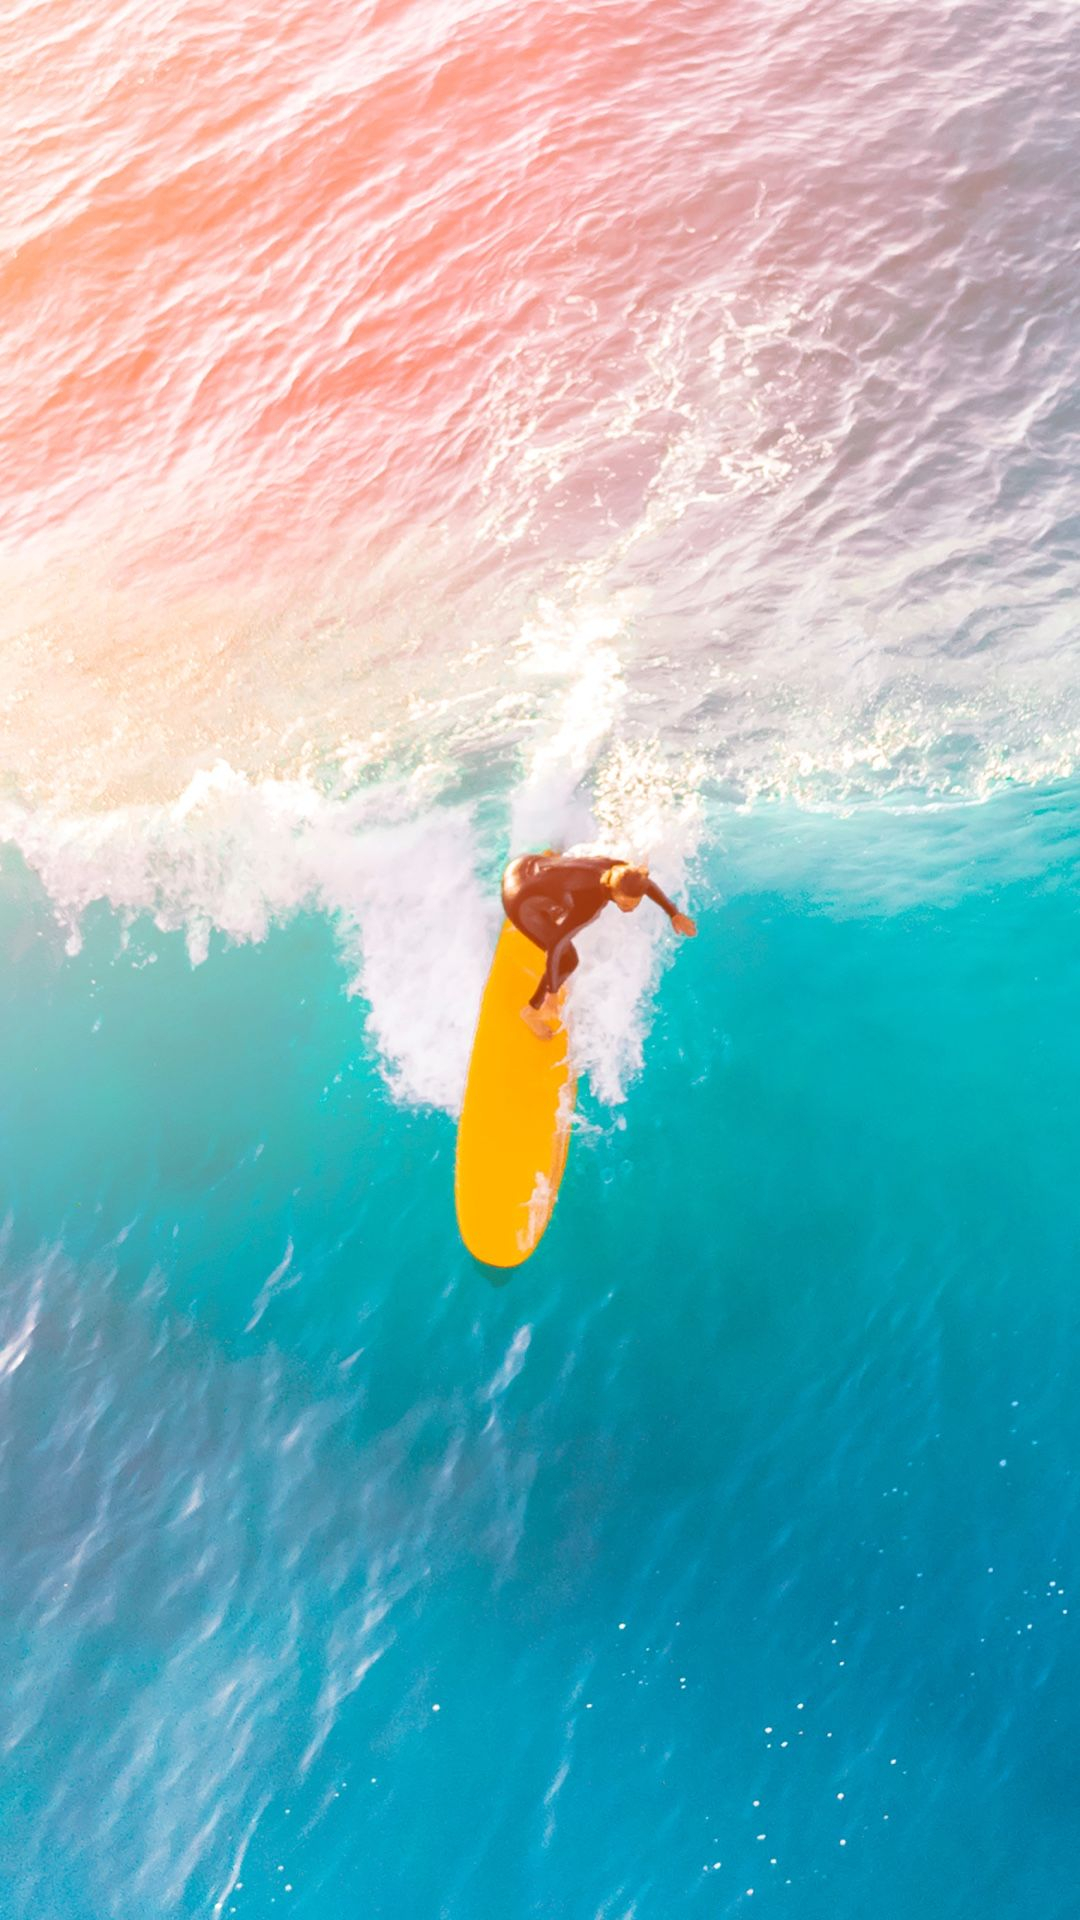 1080x1920 Surf wallpaper | Surf painting, Surfing wallpaper, Surf wallpaper